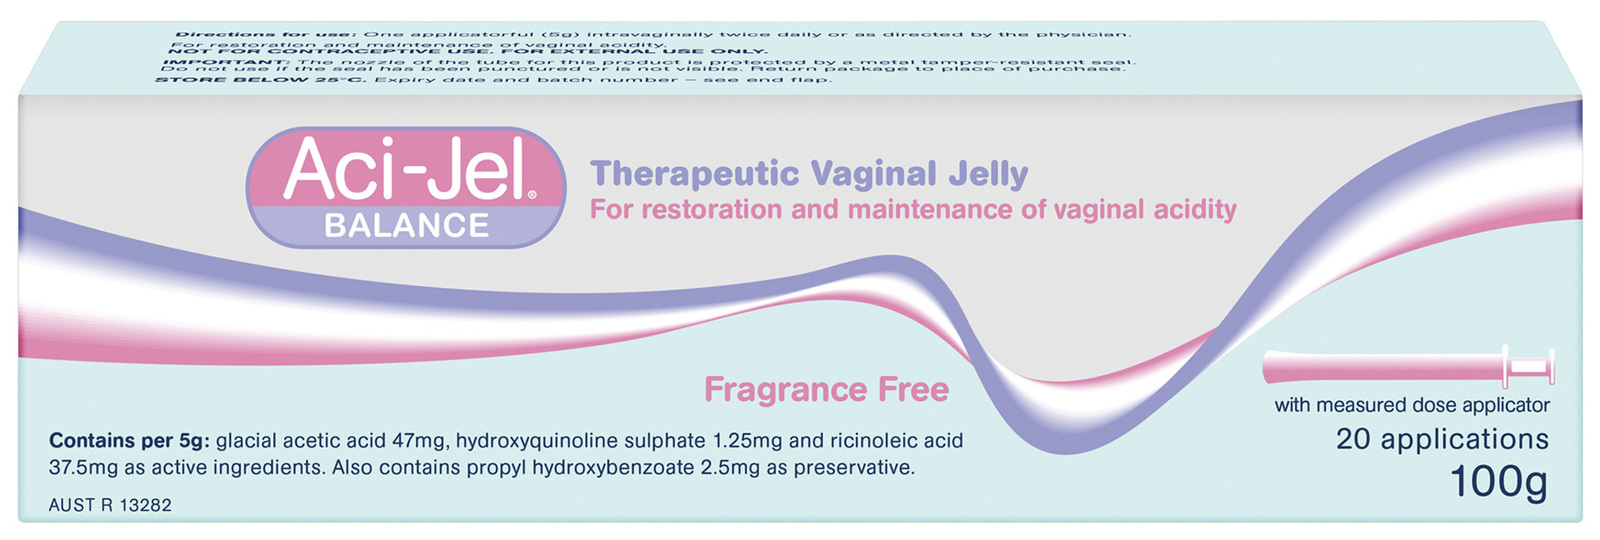 Aci-Jel Vaginal Jelly 100g - ASP Medical Online Pharmacy 